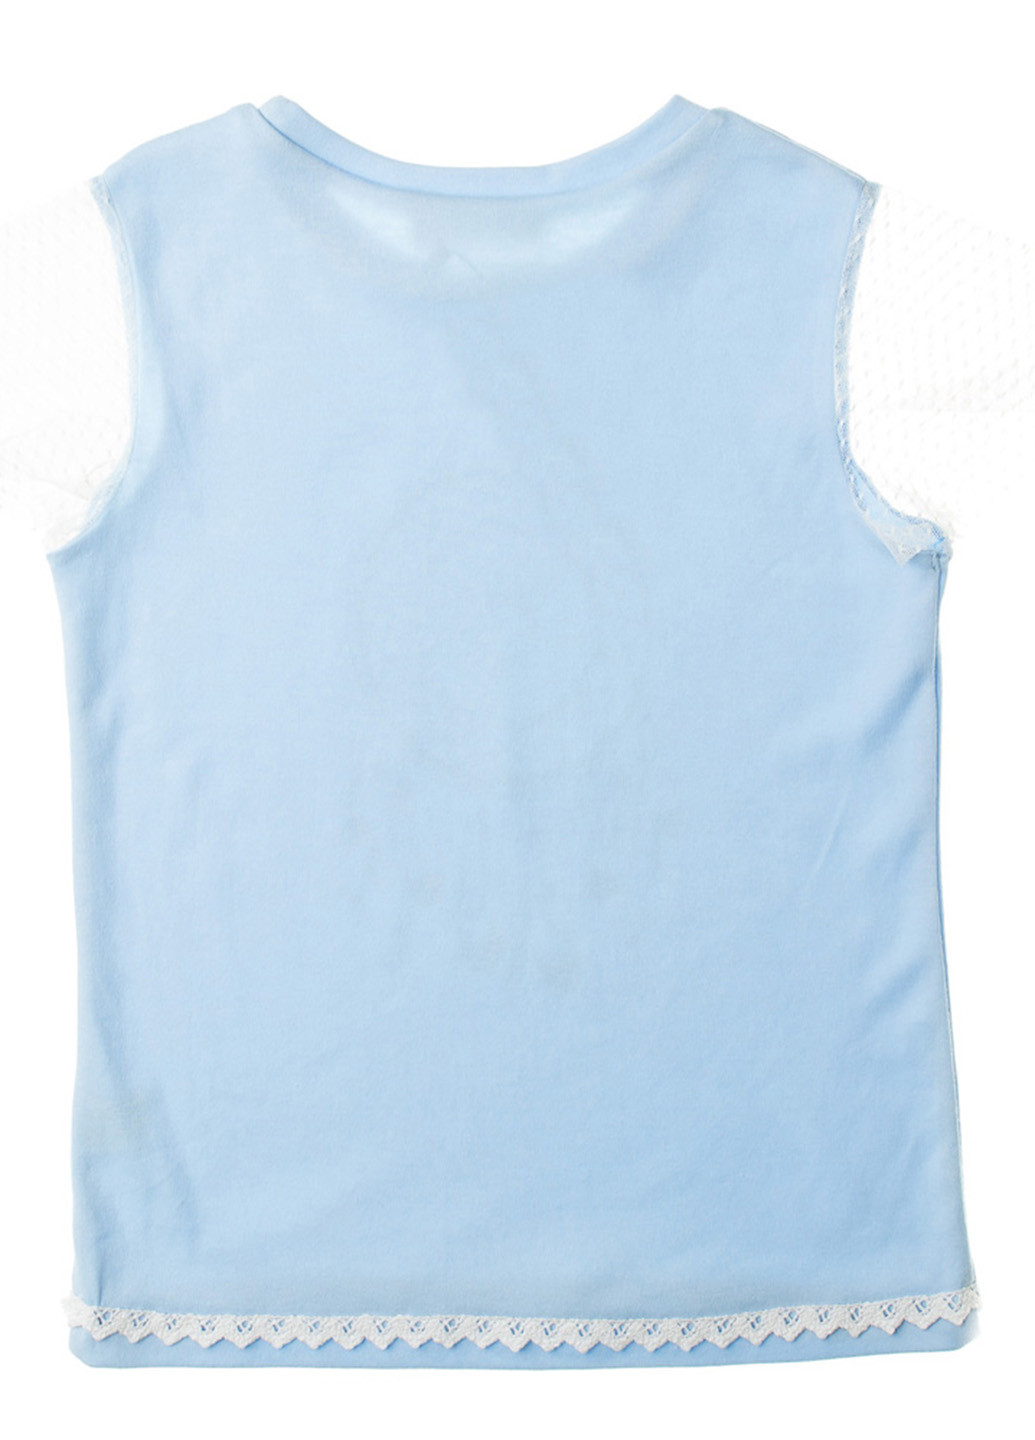 Голубая летняя футболка с коротким рукавом Kids Couture